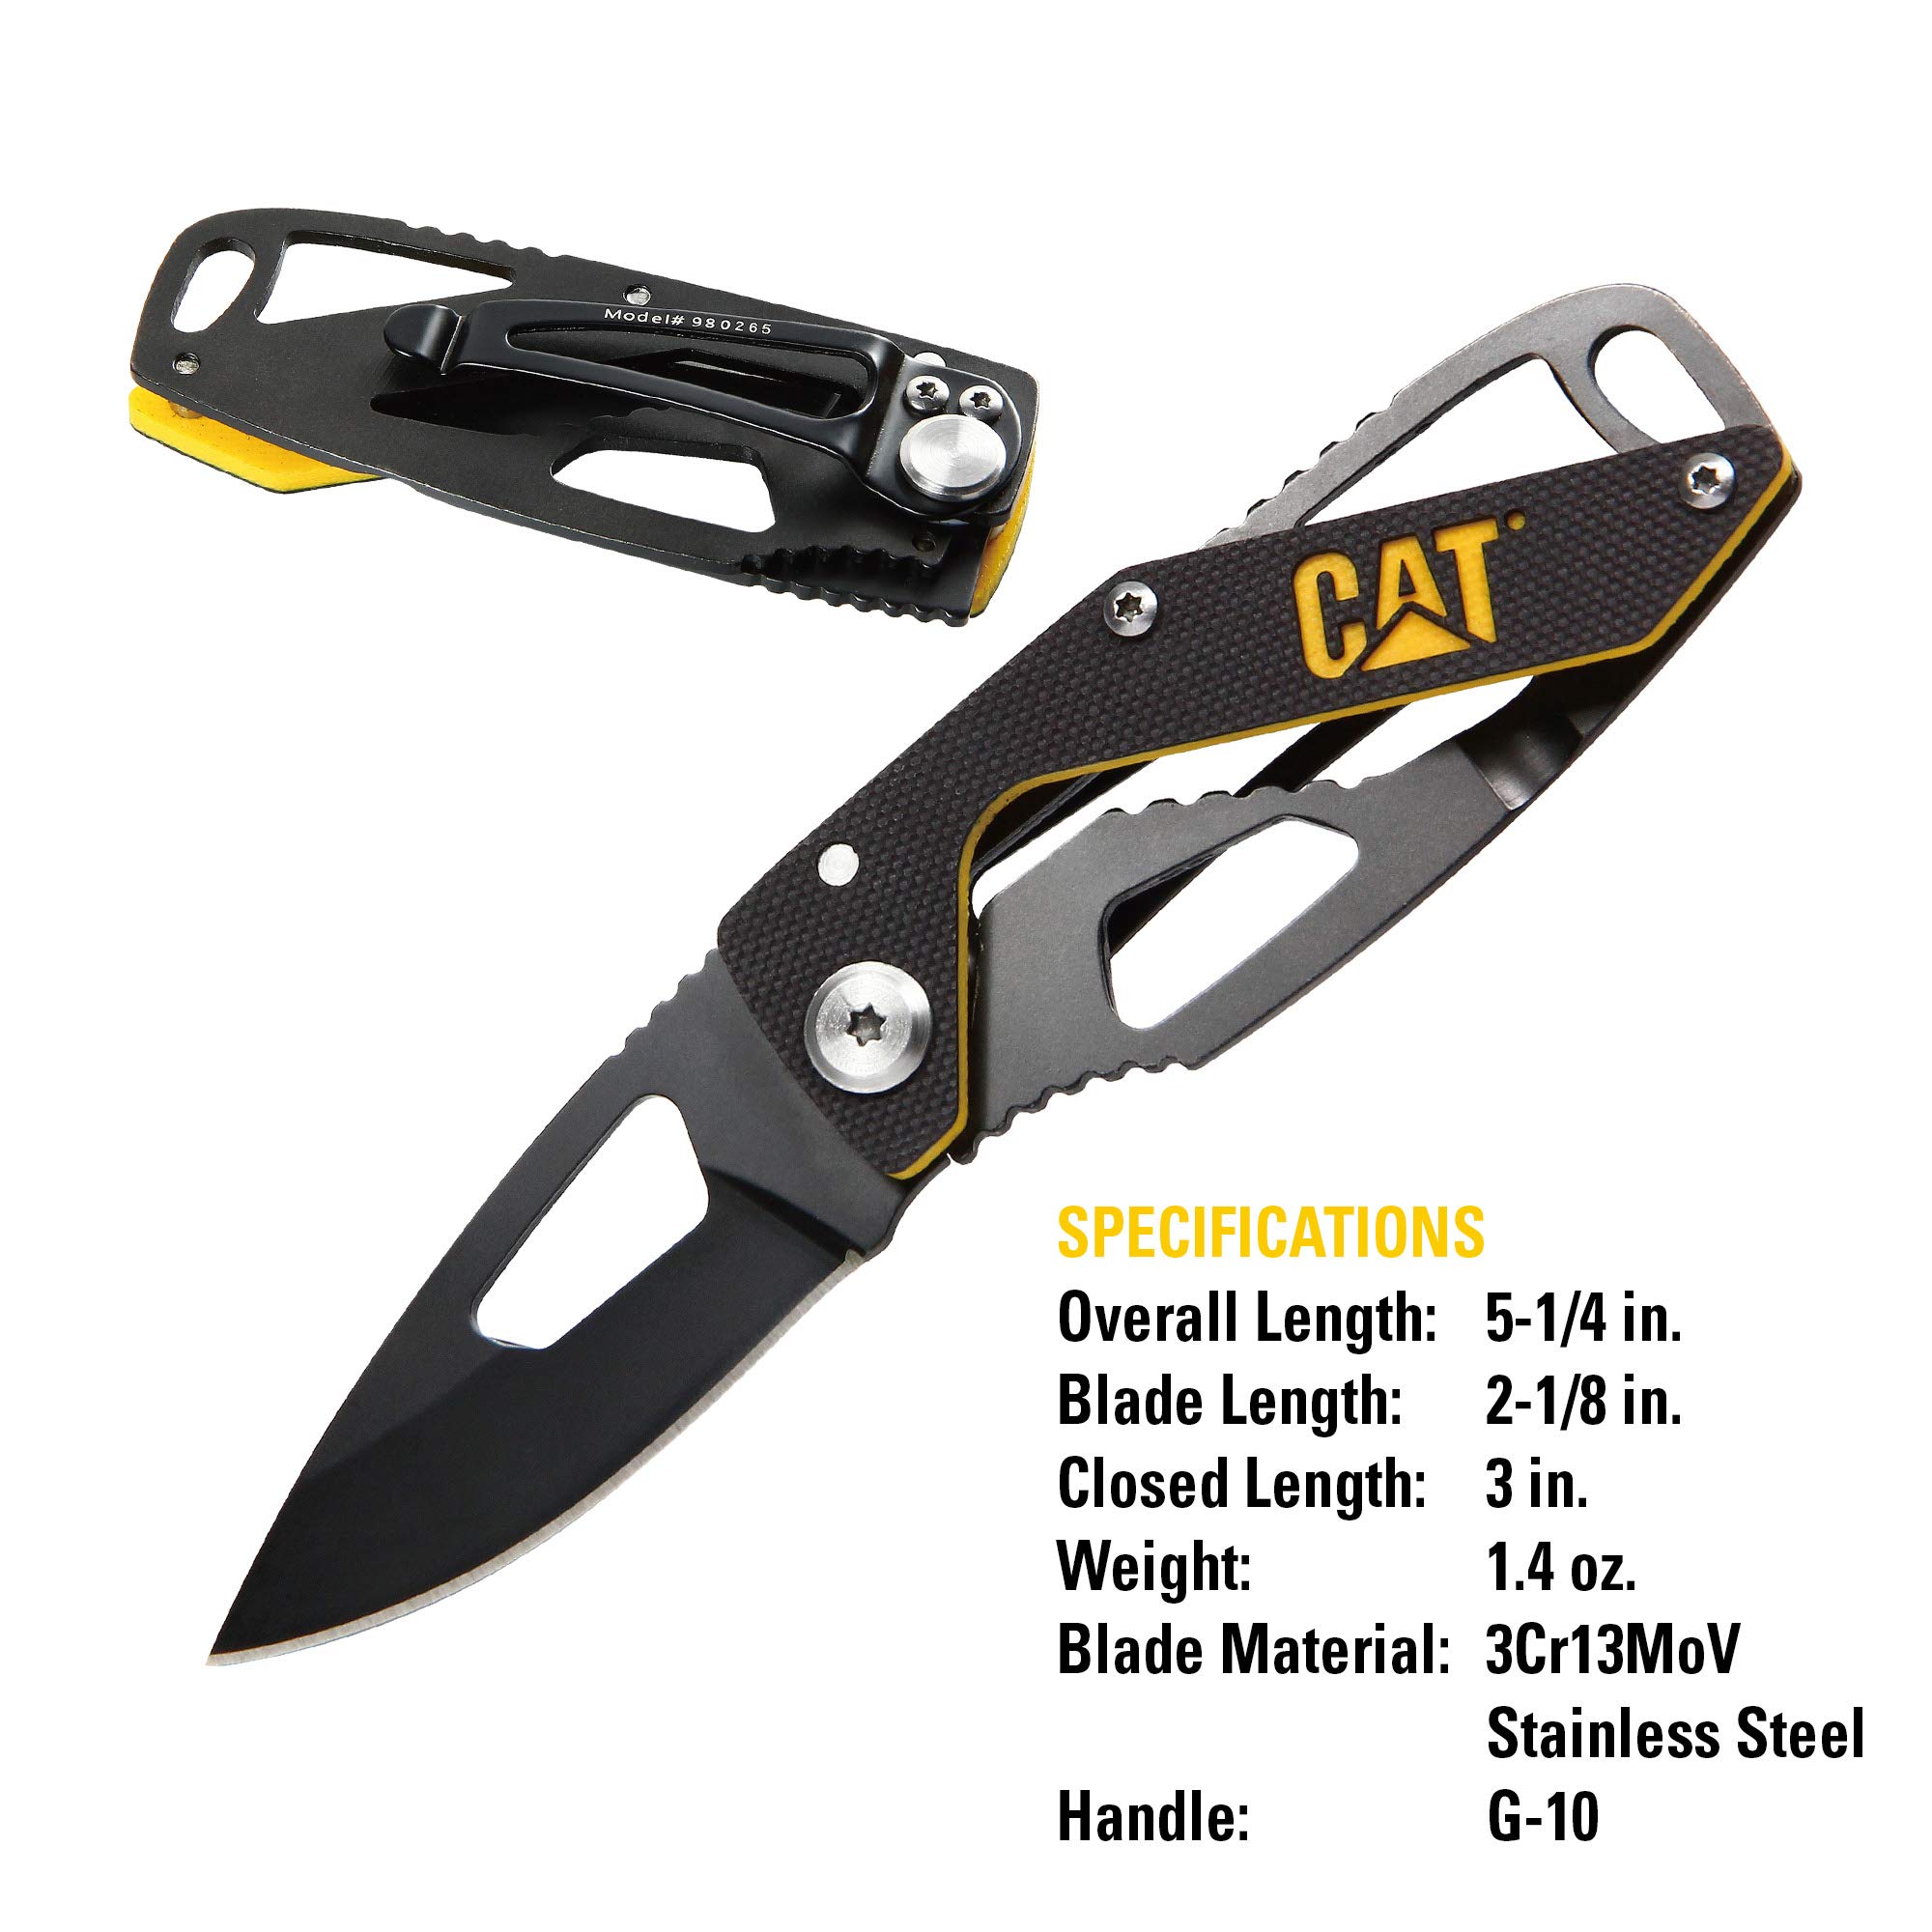 Caterpillar - 5-1/4" Cat Folding Pocket Buddy, Hand Tools, Knives/Blades - No Utility, Knives - Folding (980265)